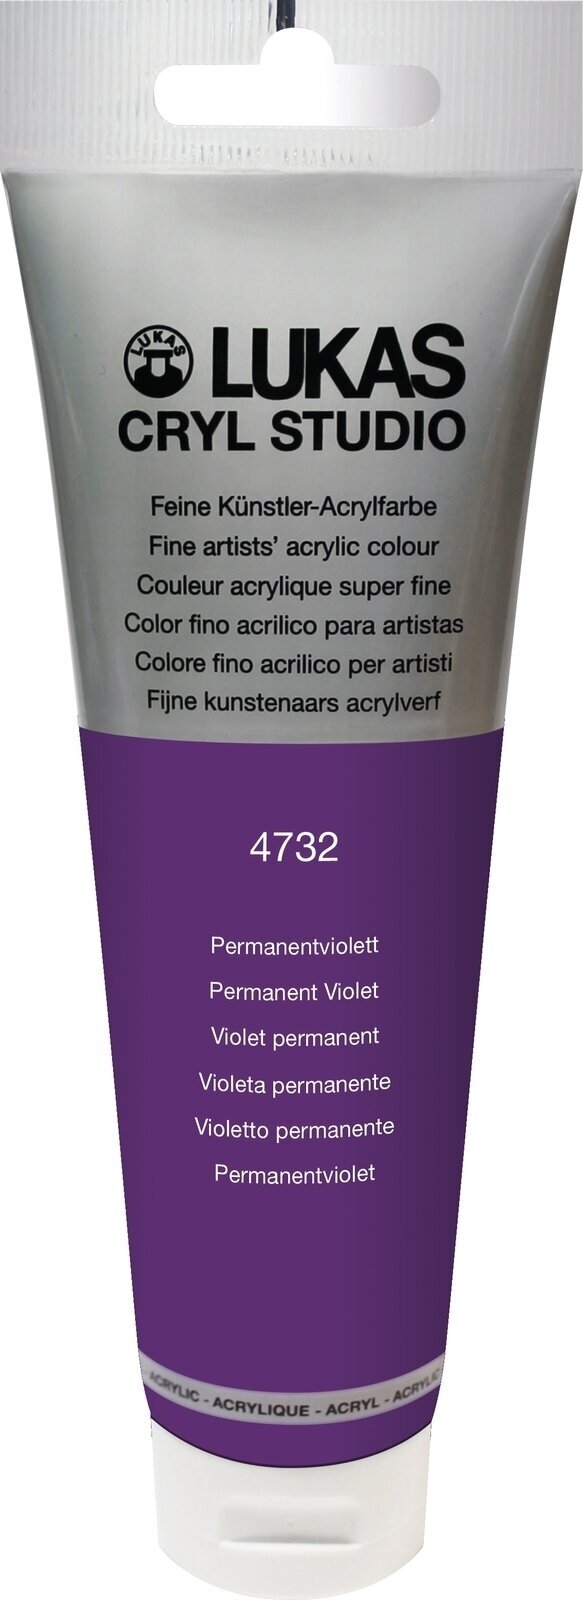 Farba akrylowa Lukas Cryl Studio Acrylic Paint Plastic Tube Farba akrylowa Permanent Violet 125 ml 1 szt